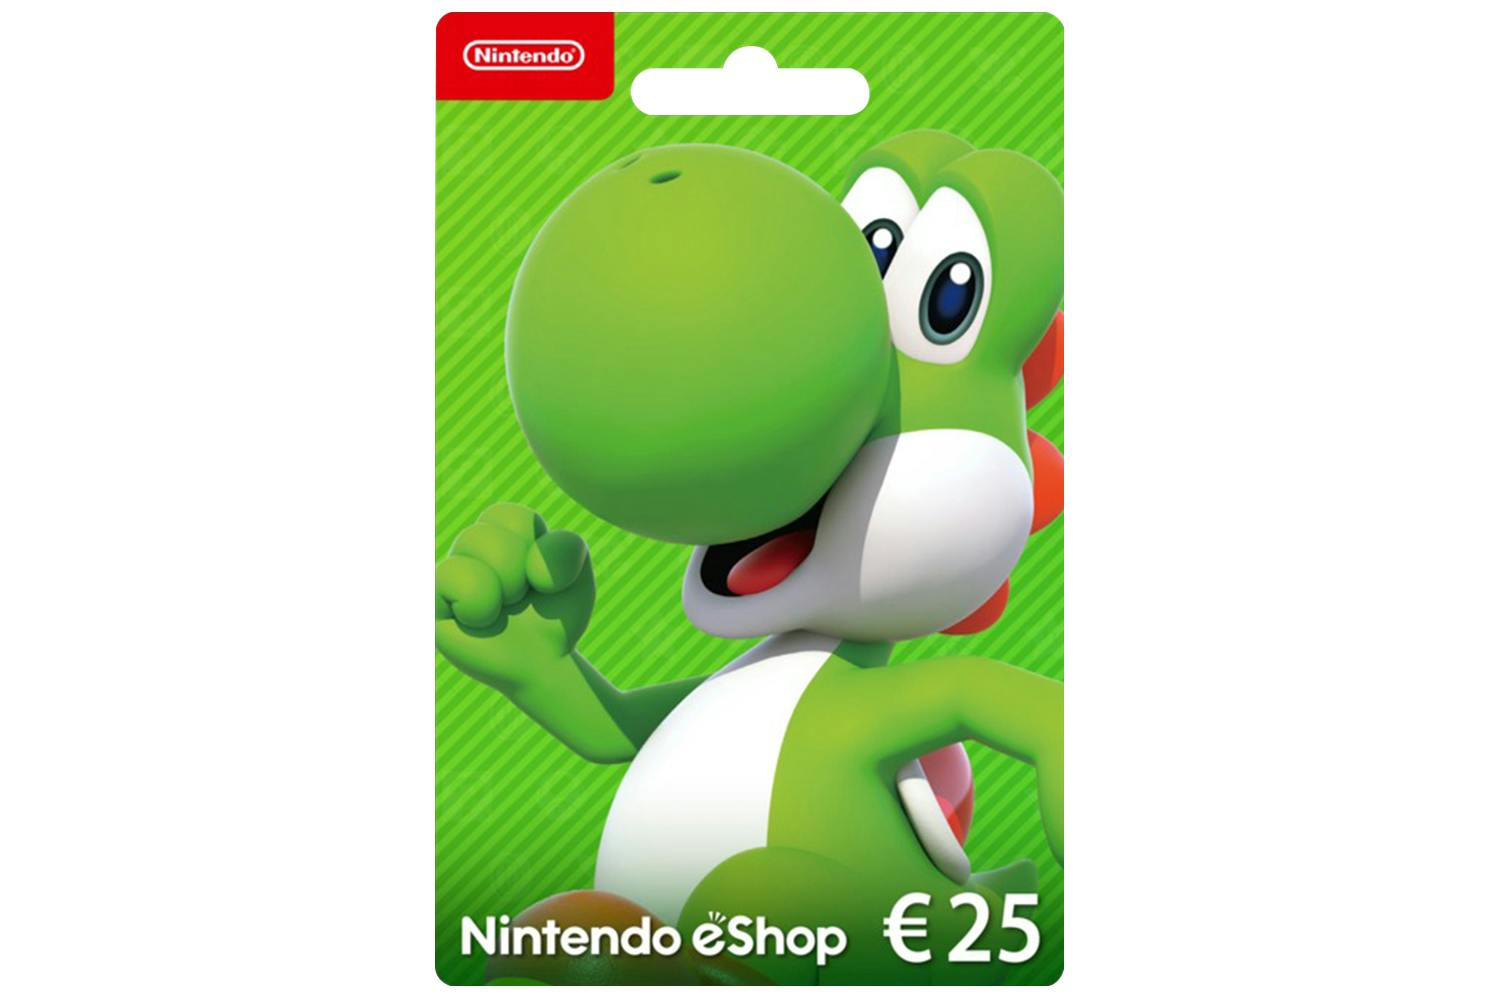 | Card Ireland Nintendo €25 eShop |